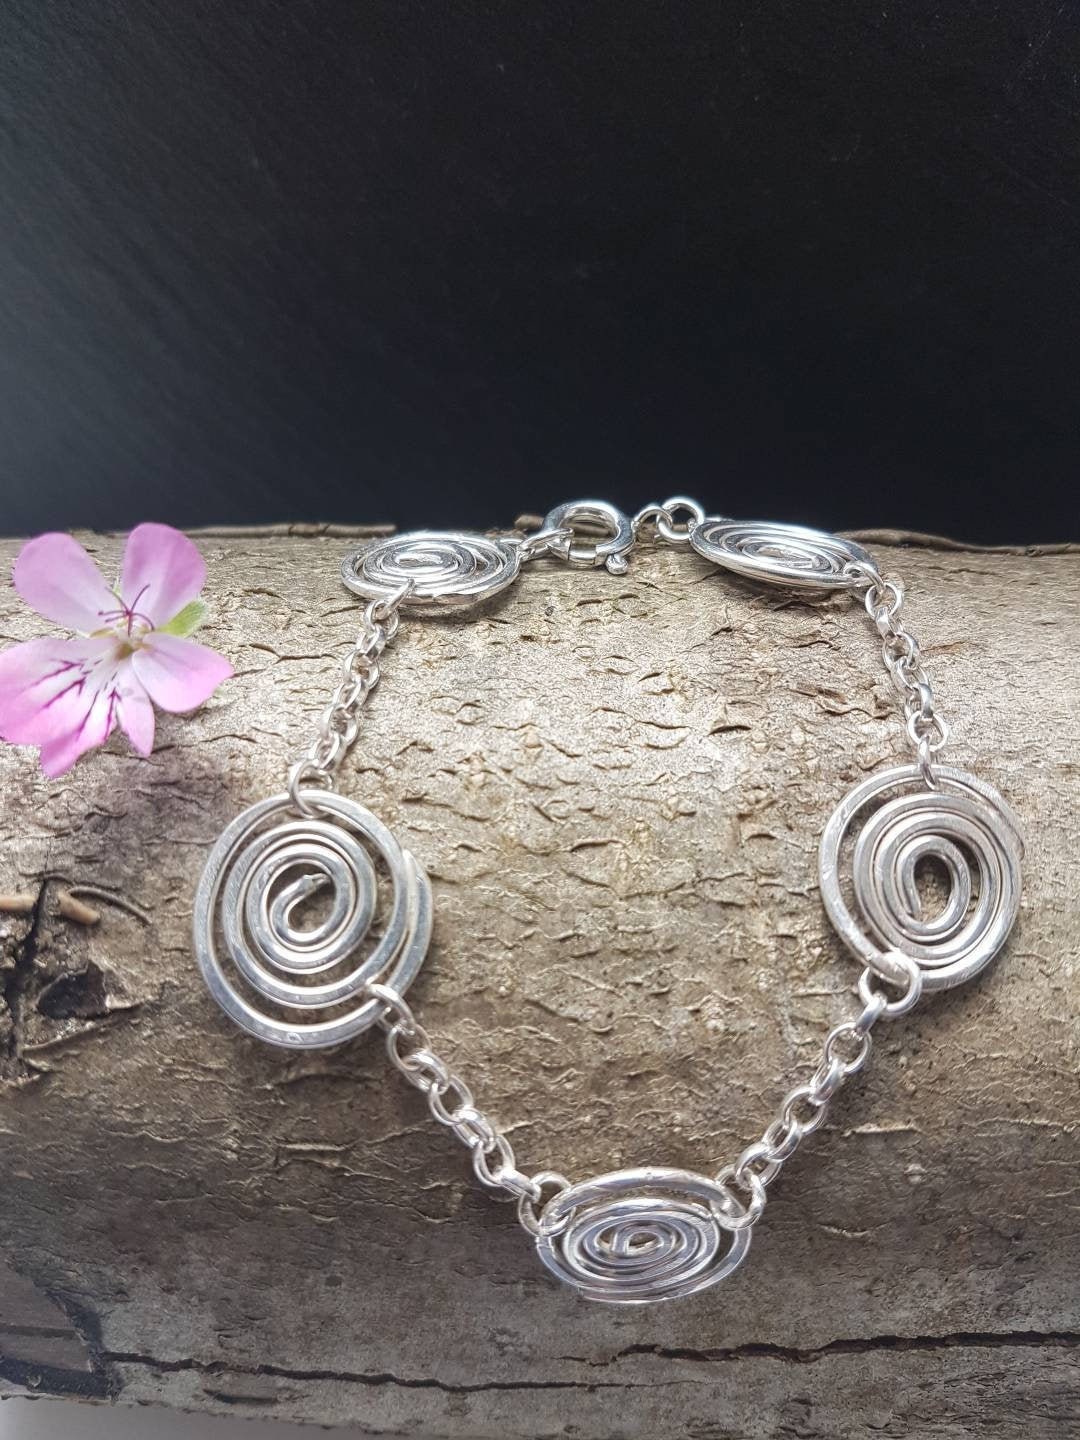 Handmade Silver Bracelet, Swirls, Swirl & Chain Handmade Jewellery, Contemporary Silver, Made in The UK